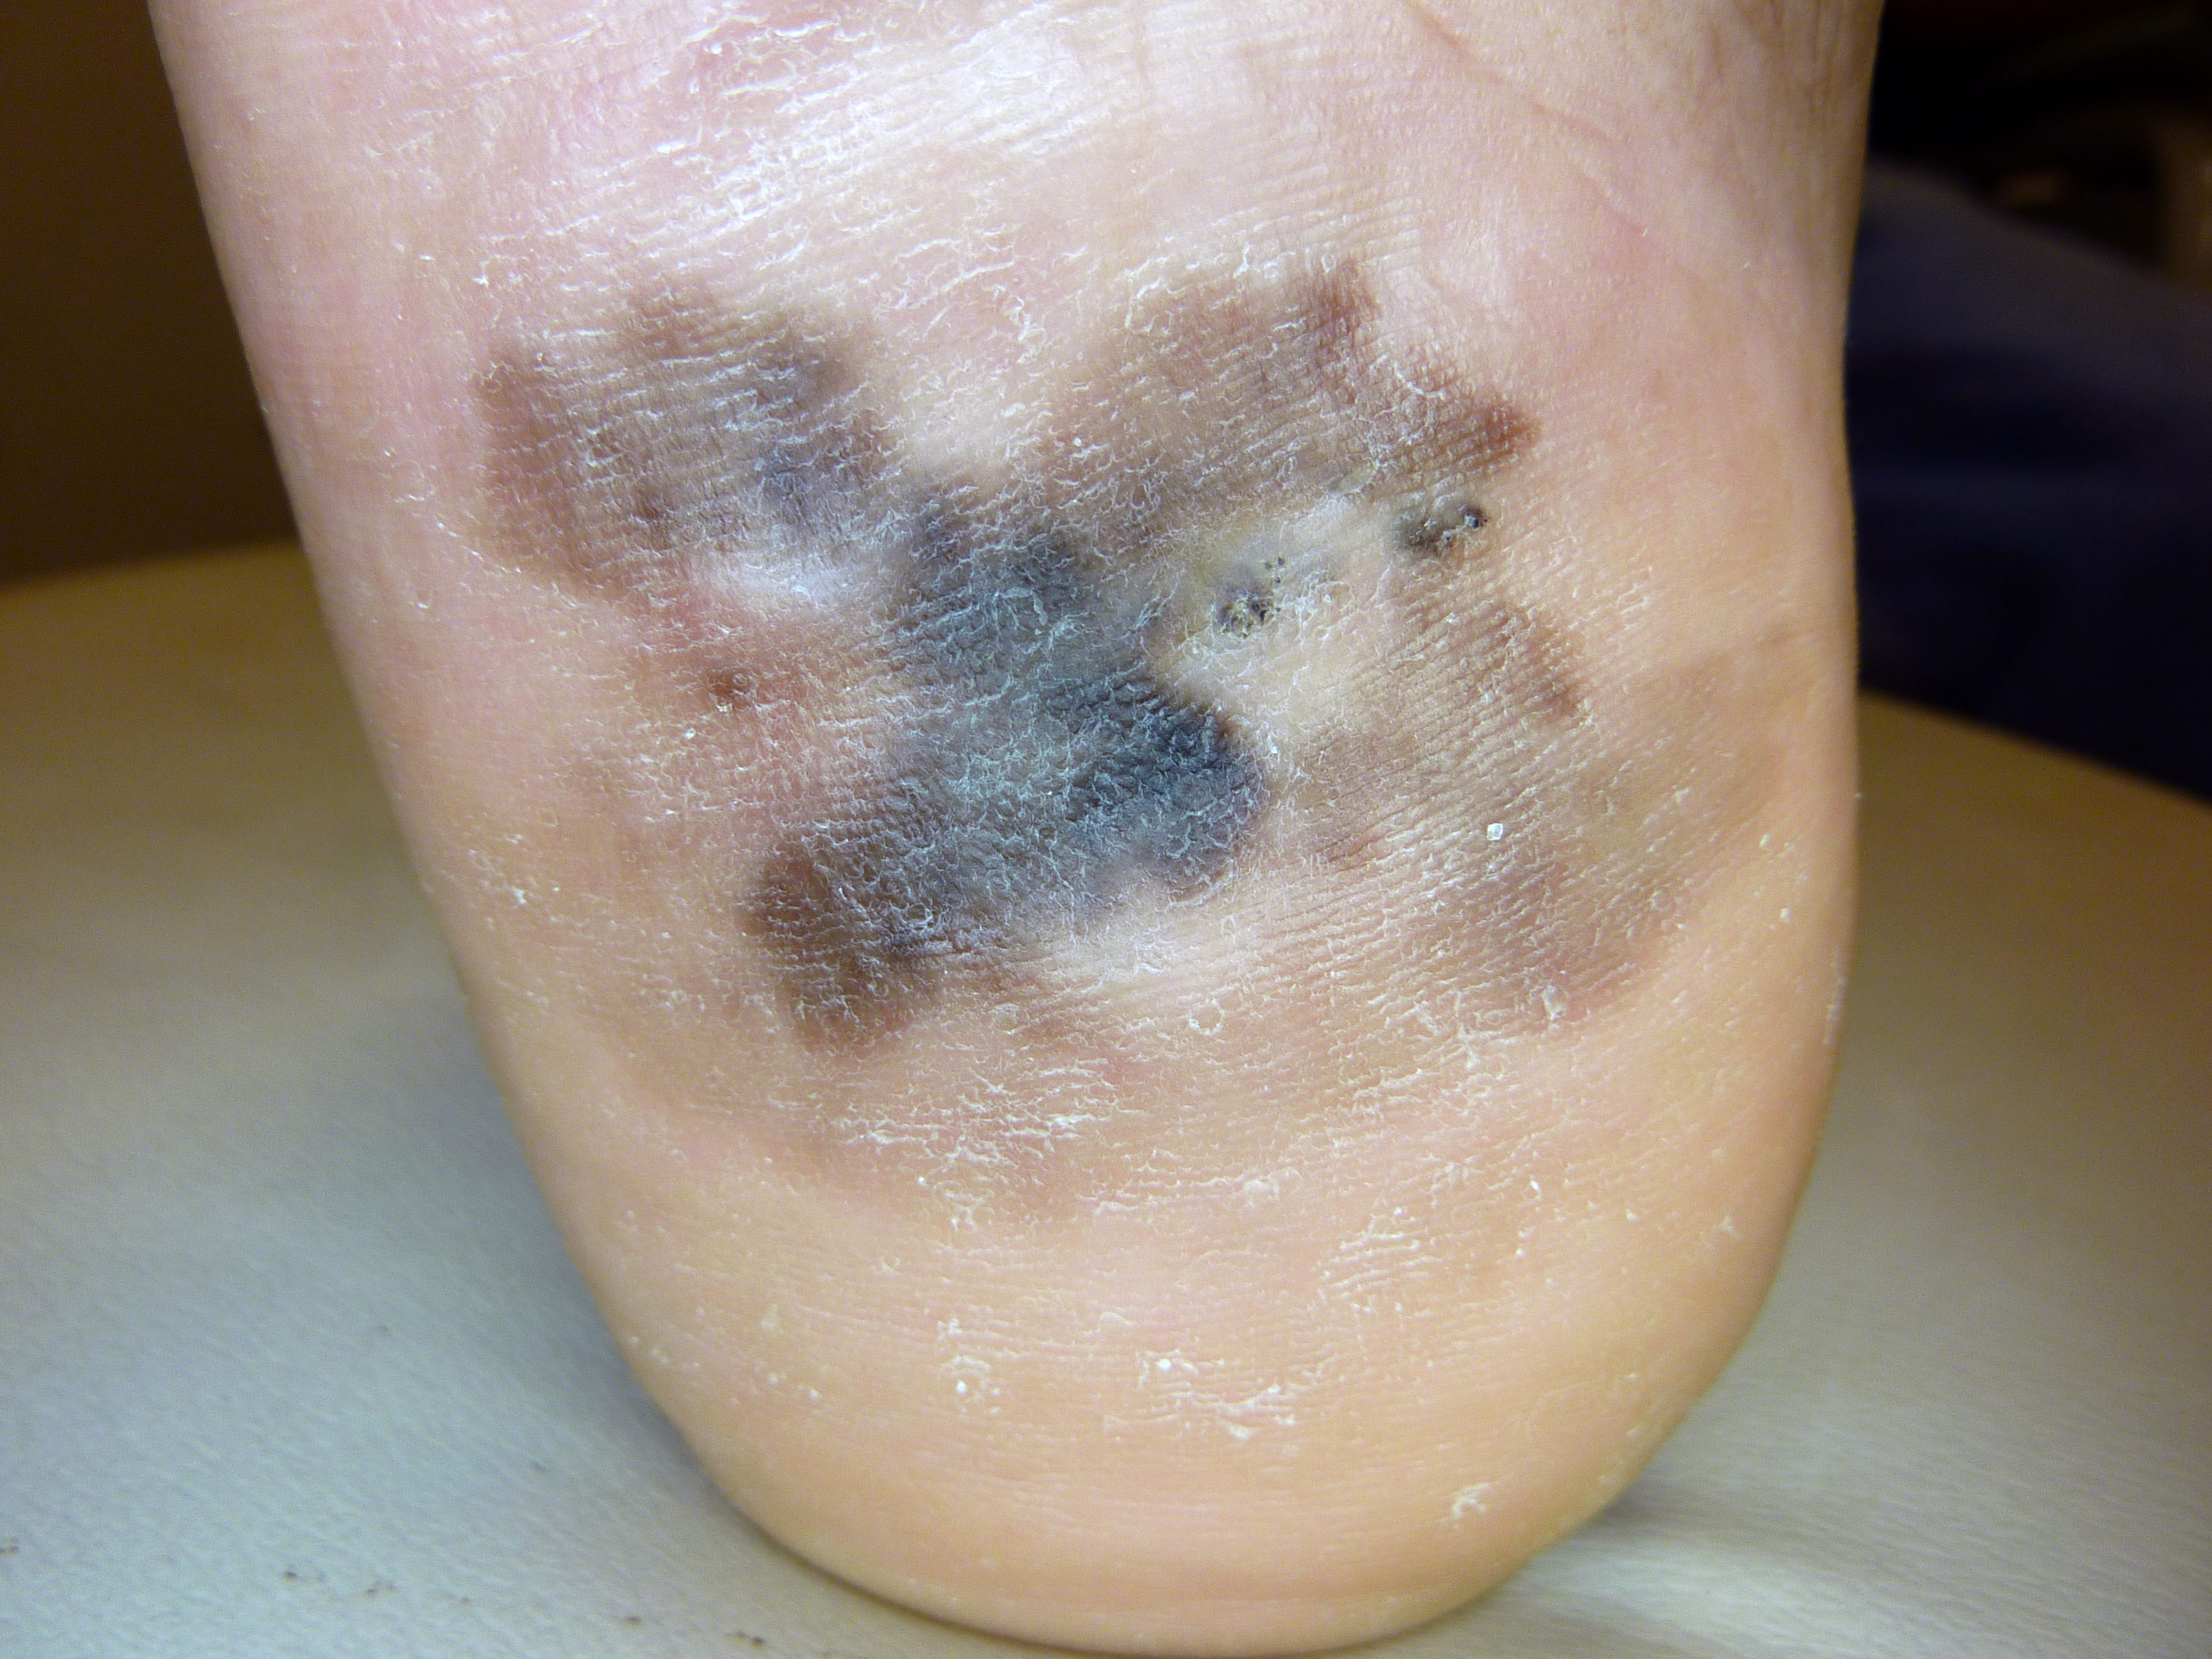 Clinical photo of an acral lentiginous melanoma